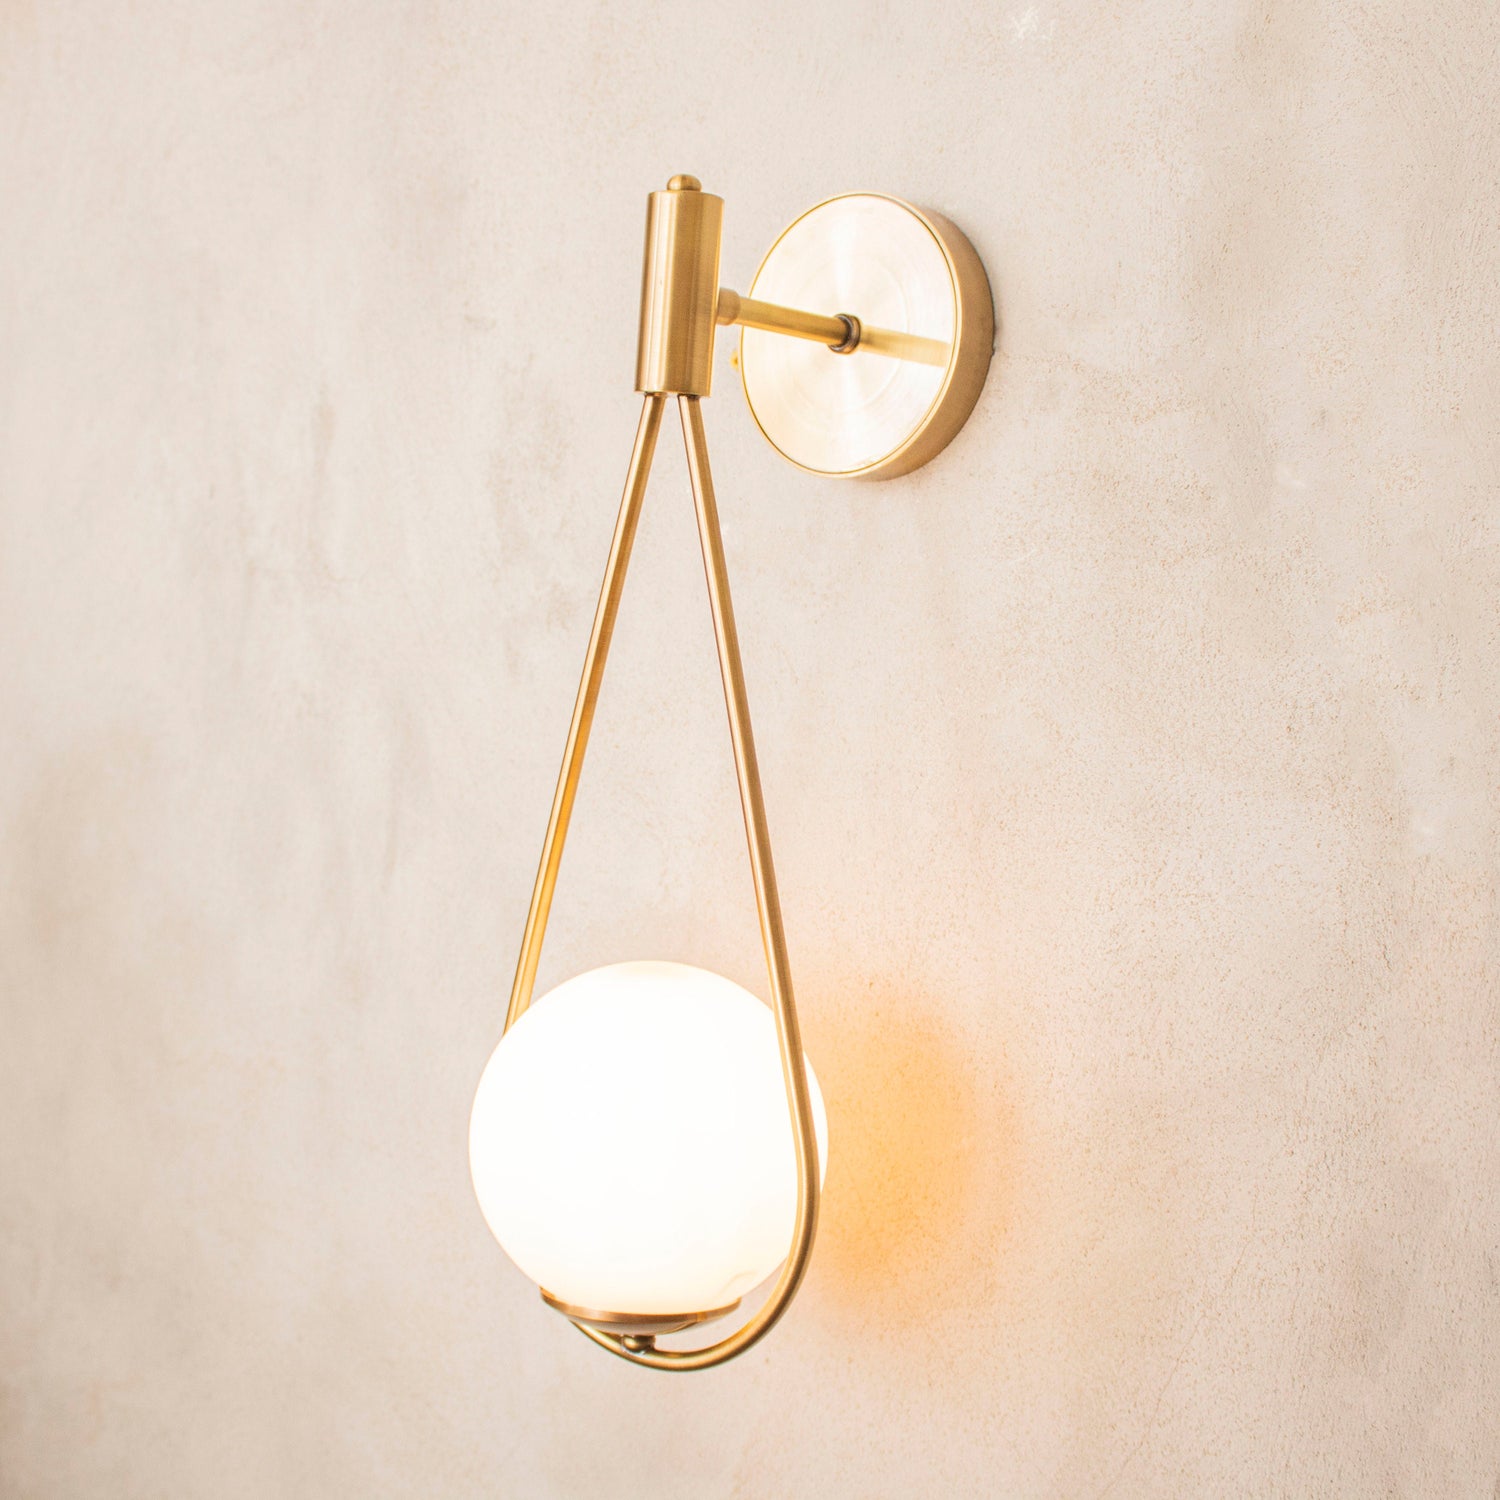 Brass & Glass Drop Lamp Fixture, Bathroom Light, Bedroom Wall Lamp, Home Decor Wall Lighting, Modern Handmade Sconce, MODEL : CAPELLA